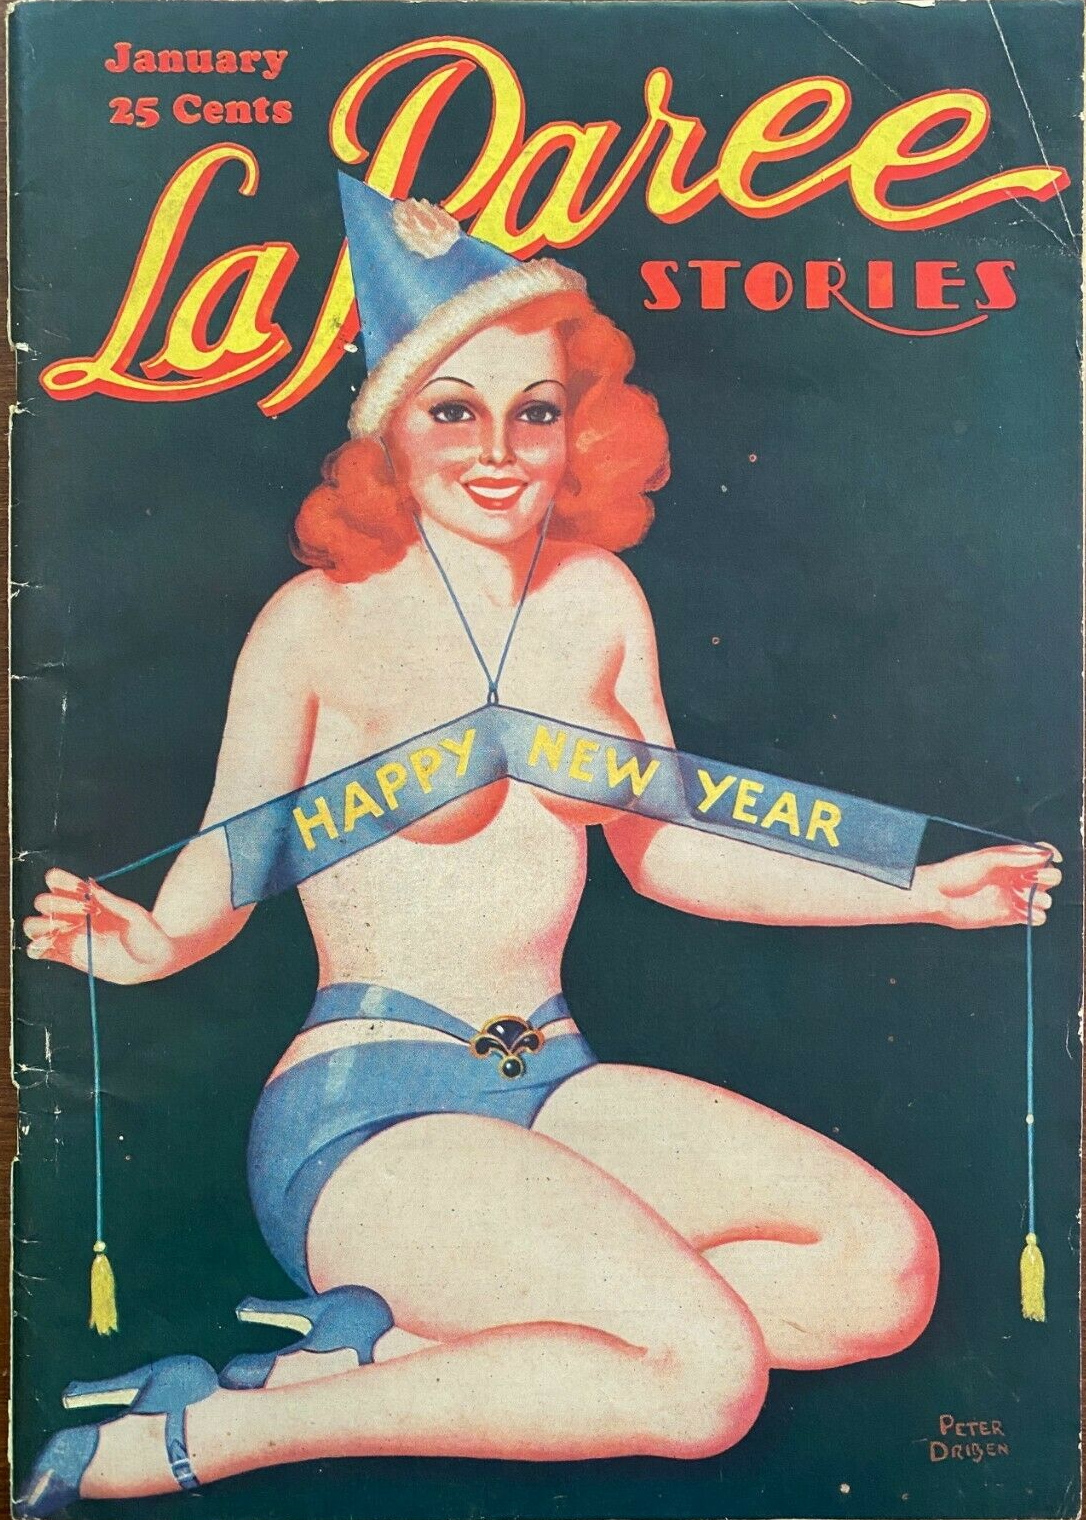 La Paree Stories - January 1938